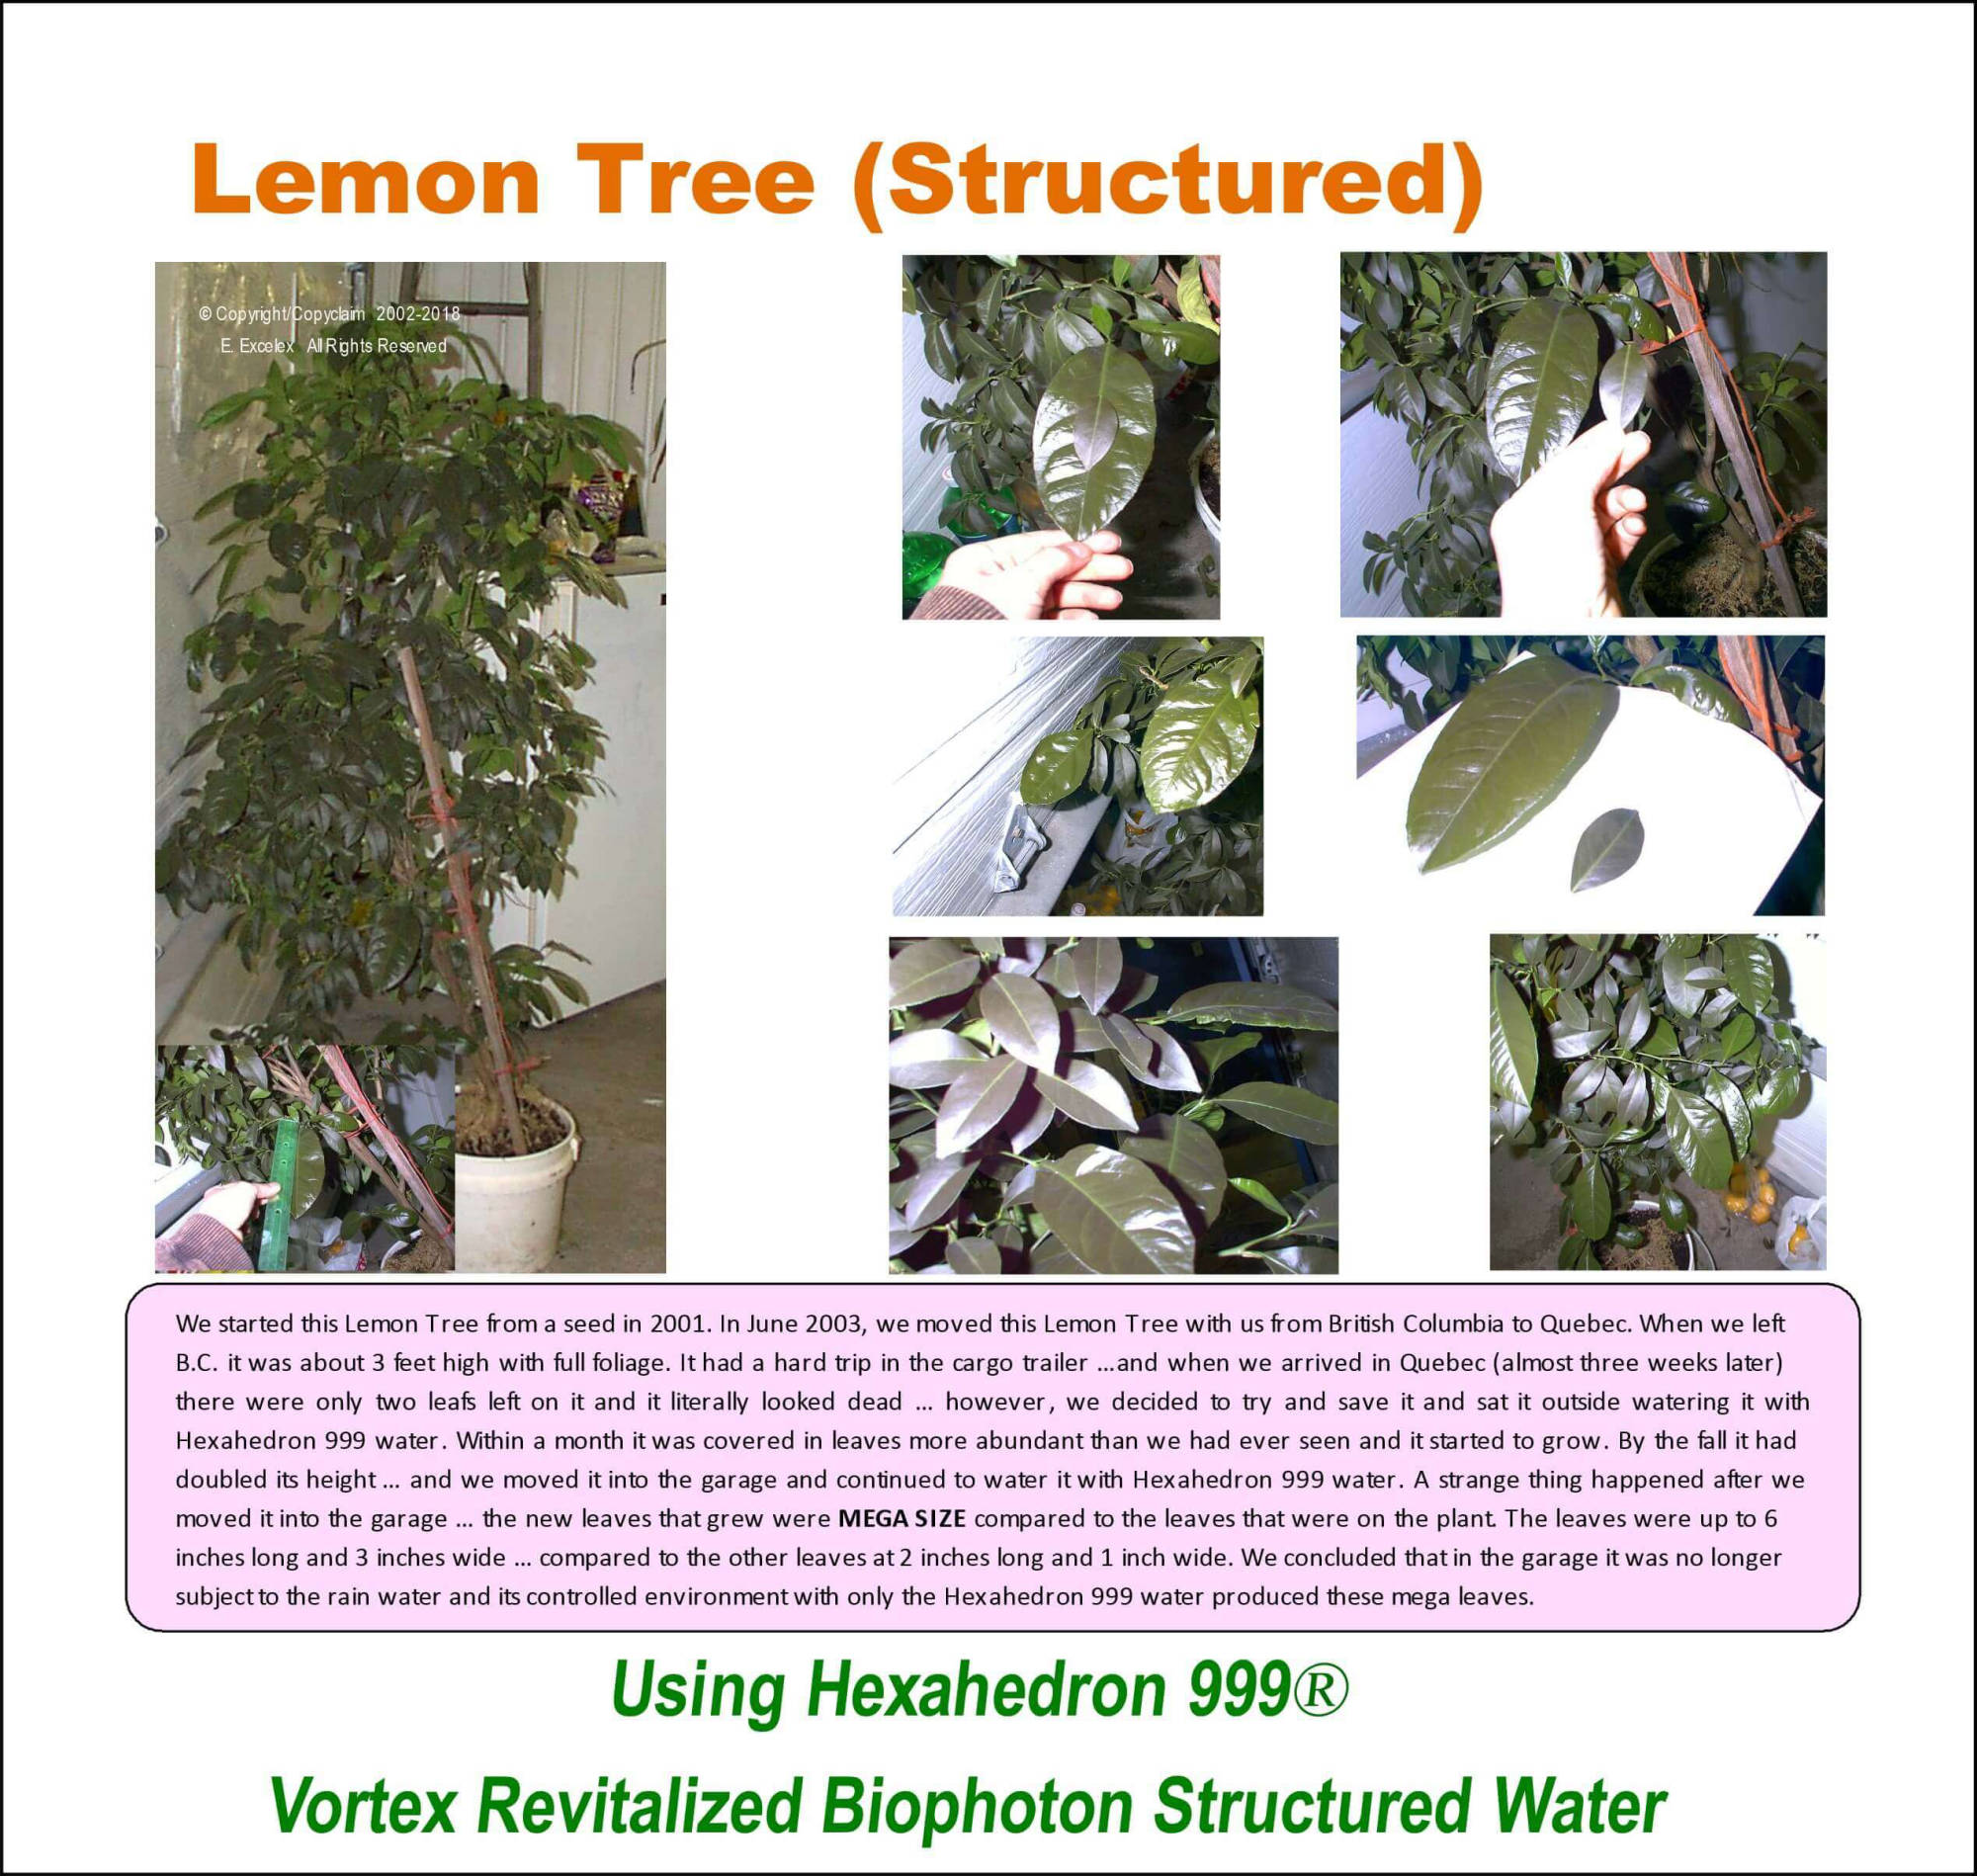 Lemon Tree using Hexahedron 999 Vortex Revitalized Biophoton Structured Water